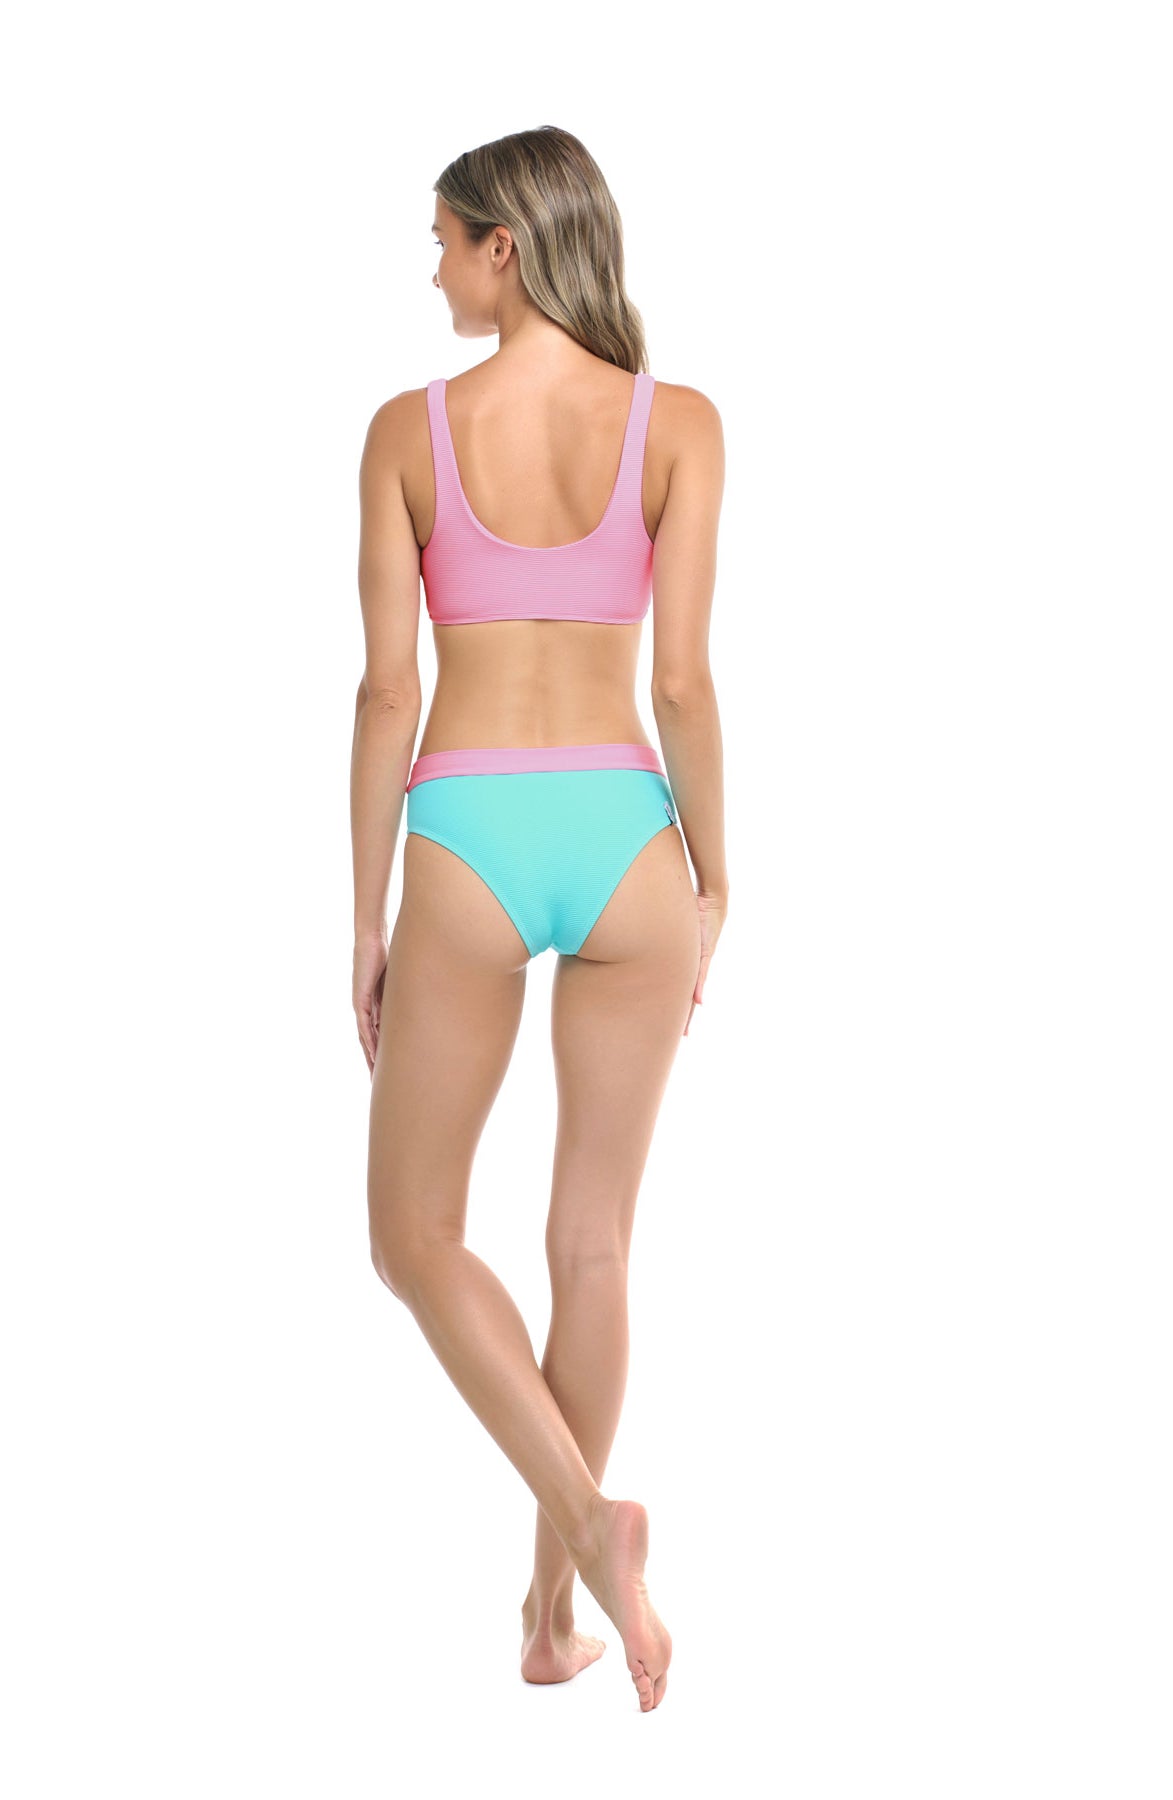 Body Glove: Spectrum Kate Scoop Bikinii Top - PITAYA